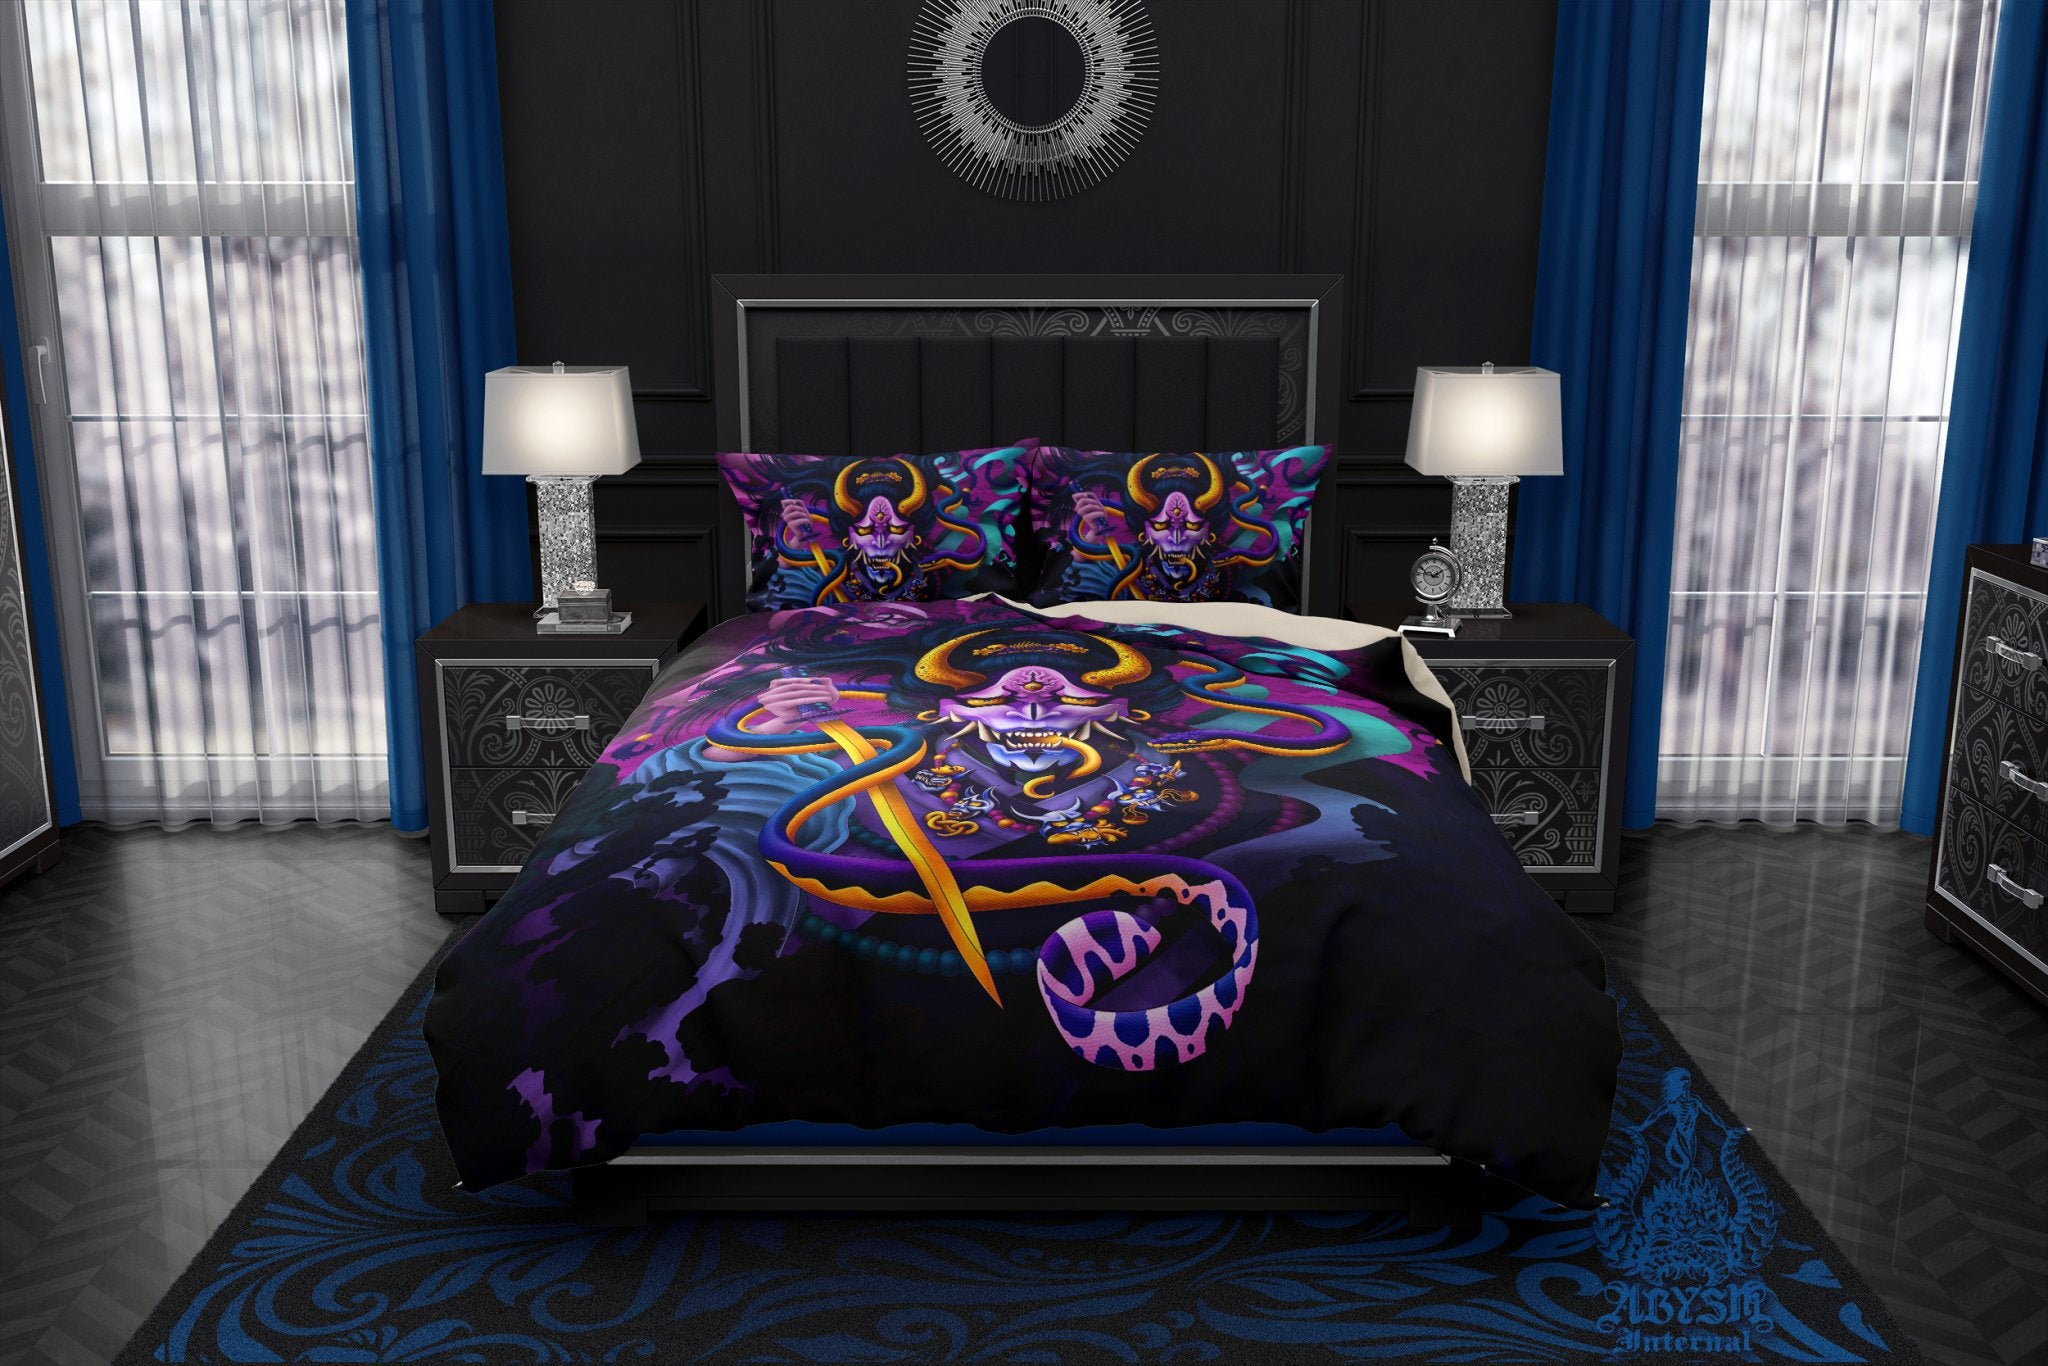 Trippy Bedding Set, Comforter or Duvet, Pastel Black Bed Cover, Japanese Demon Bedroom Decor, King, Queen & Twin Size - Snake and Hannya - Abysm Internal